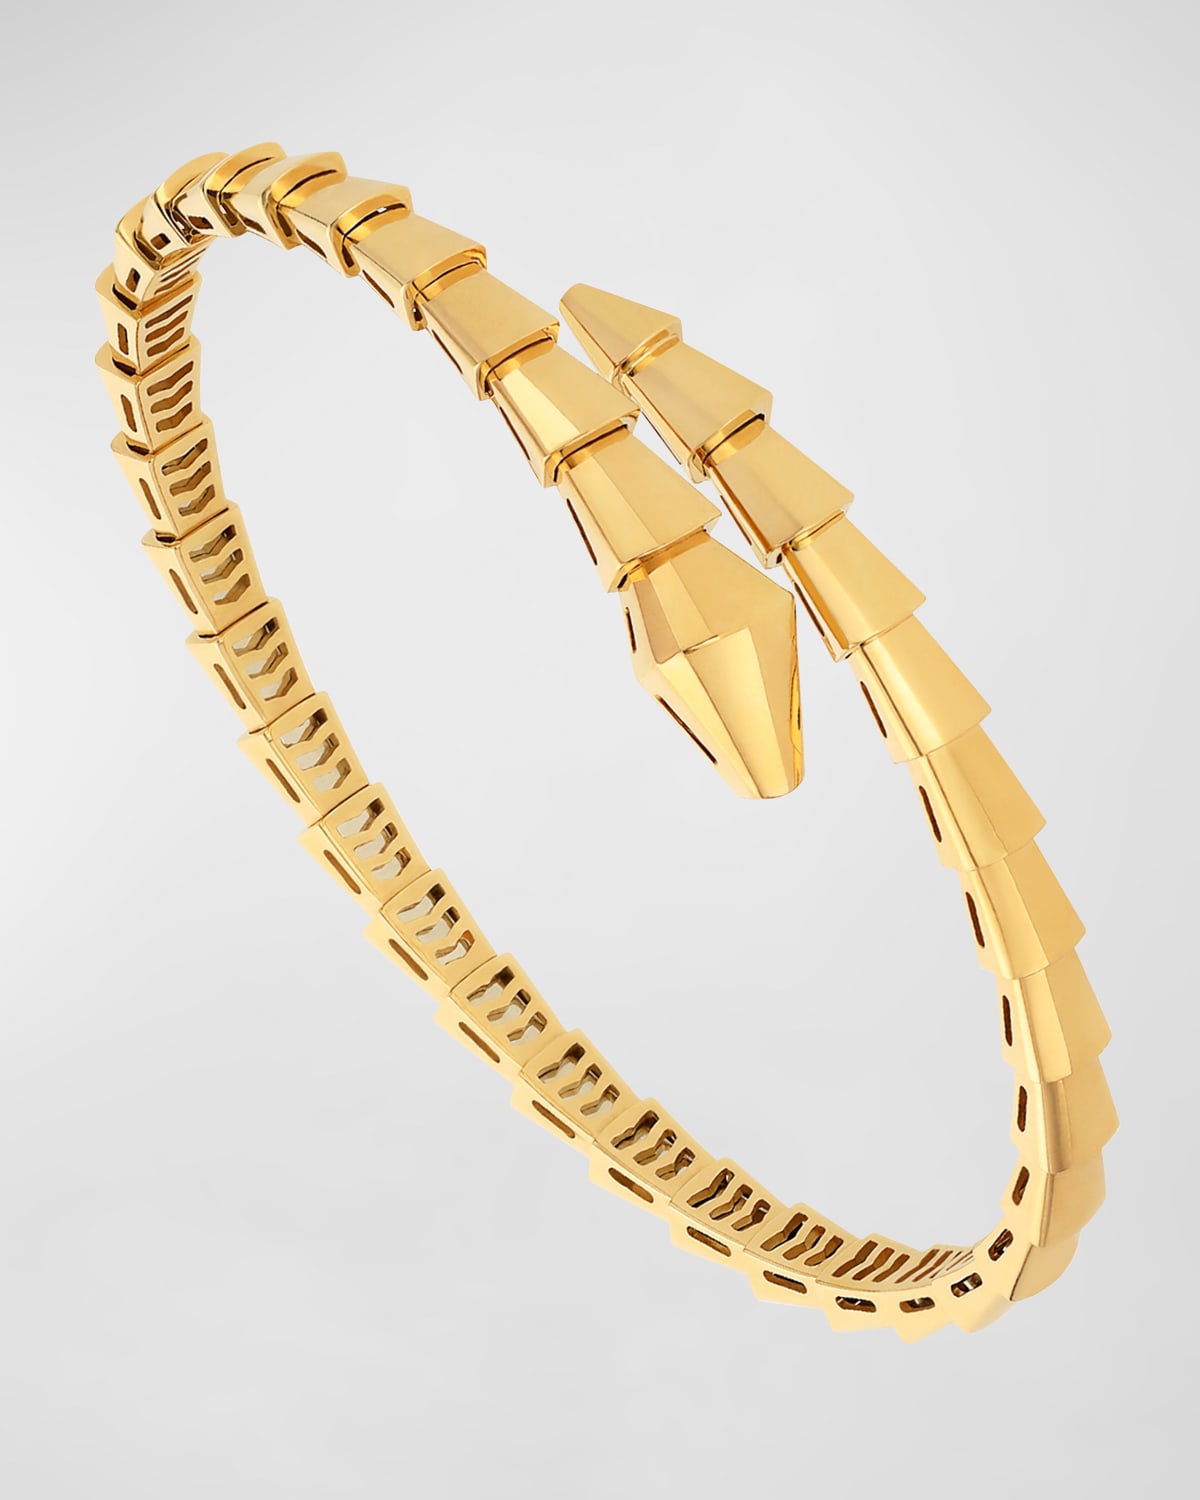 Rose gold Serpenti Viper Bracelet with 5.02 ct Diamonds